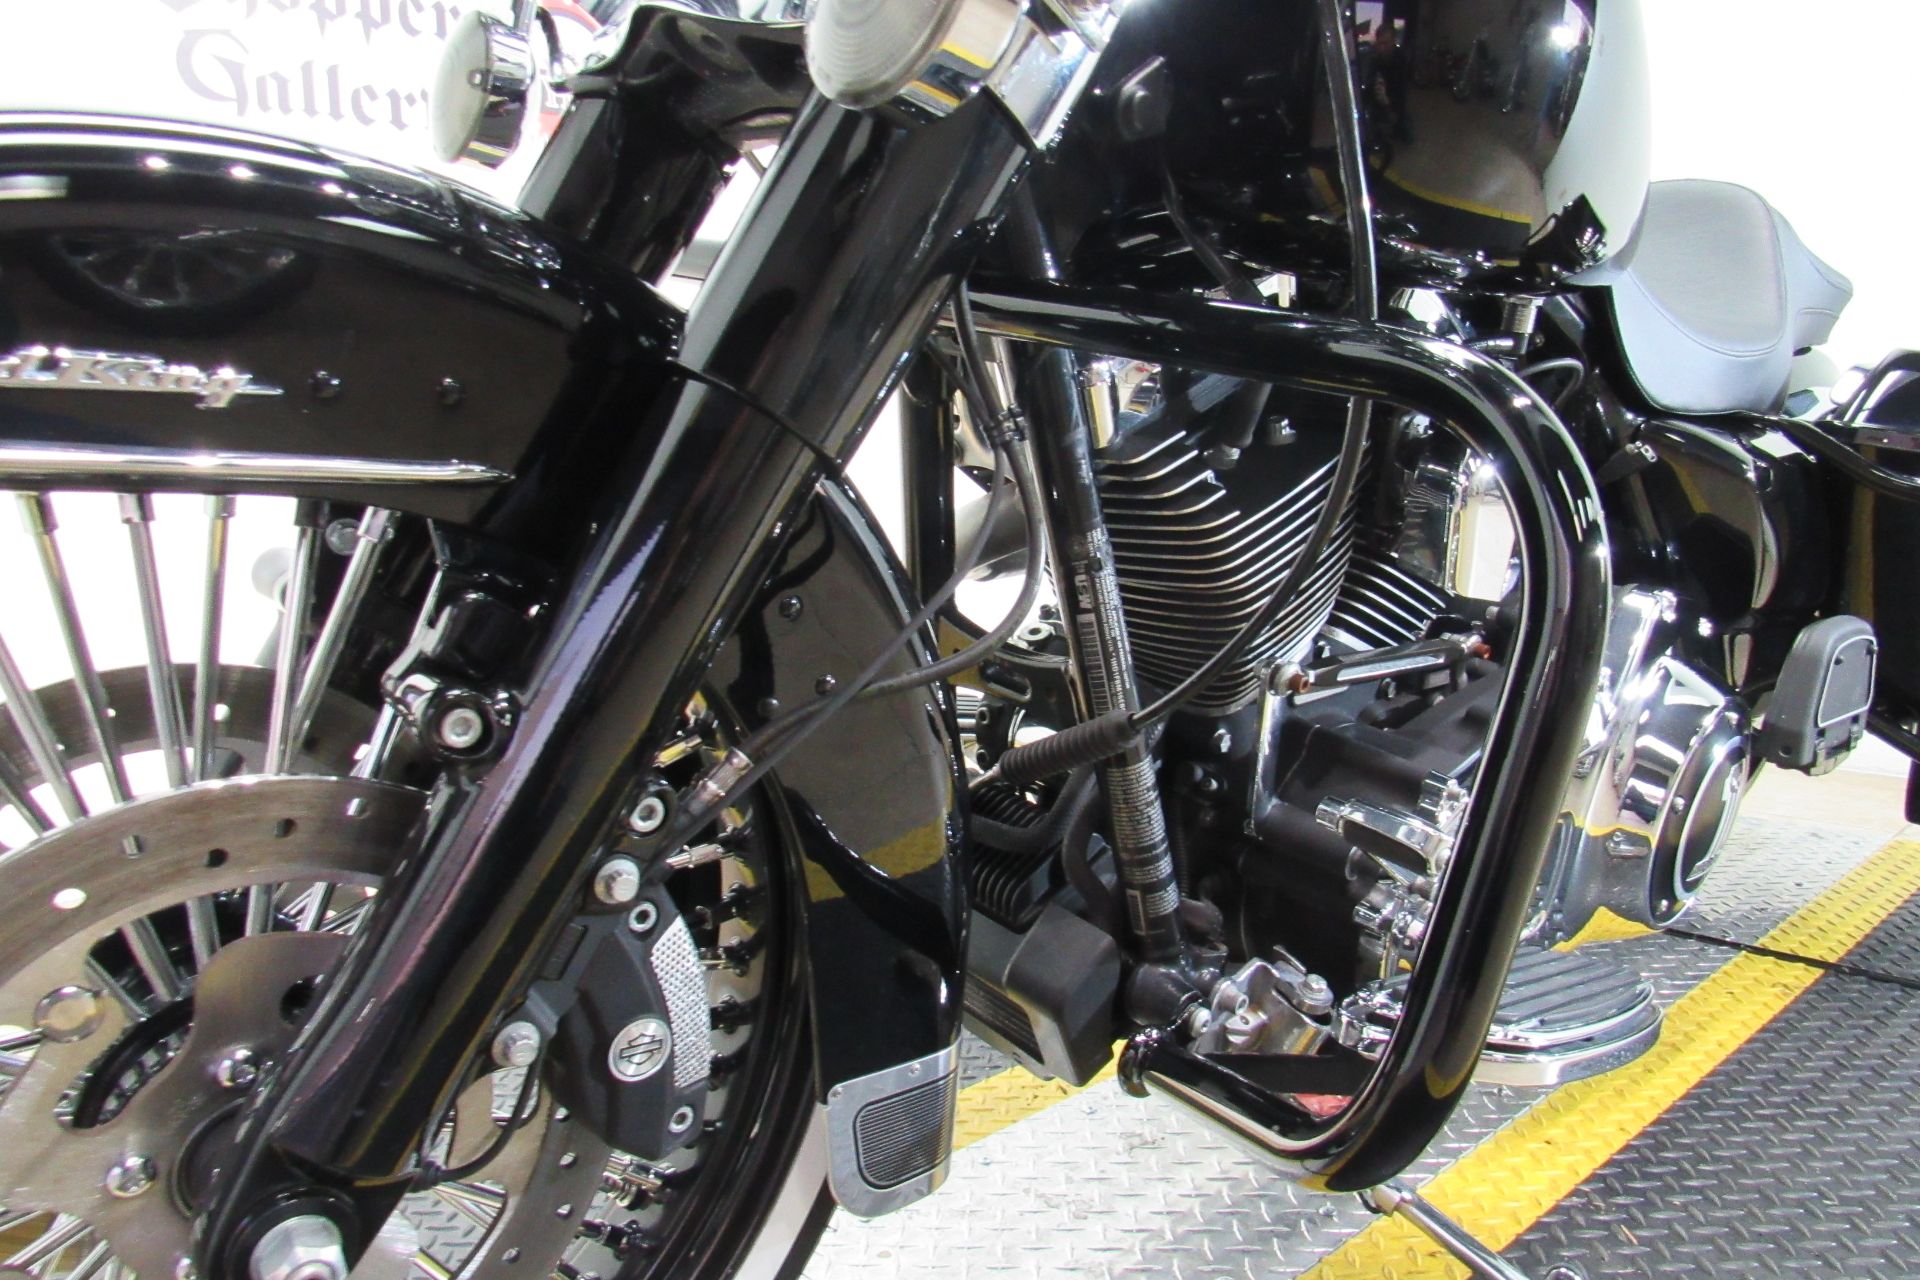 2014 Harley-Davidson Road King® in Temecula, California - Photo 18